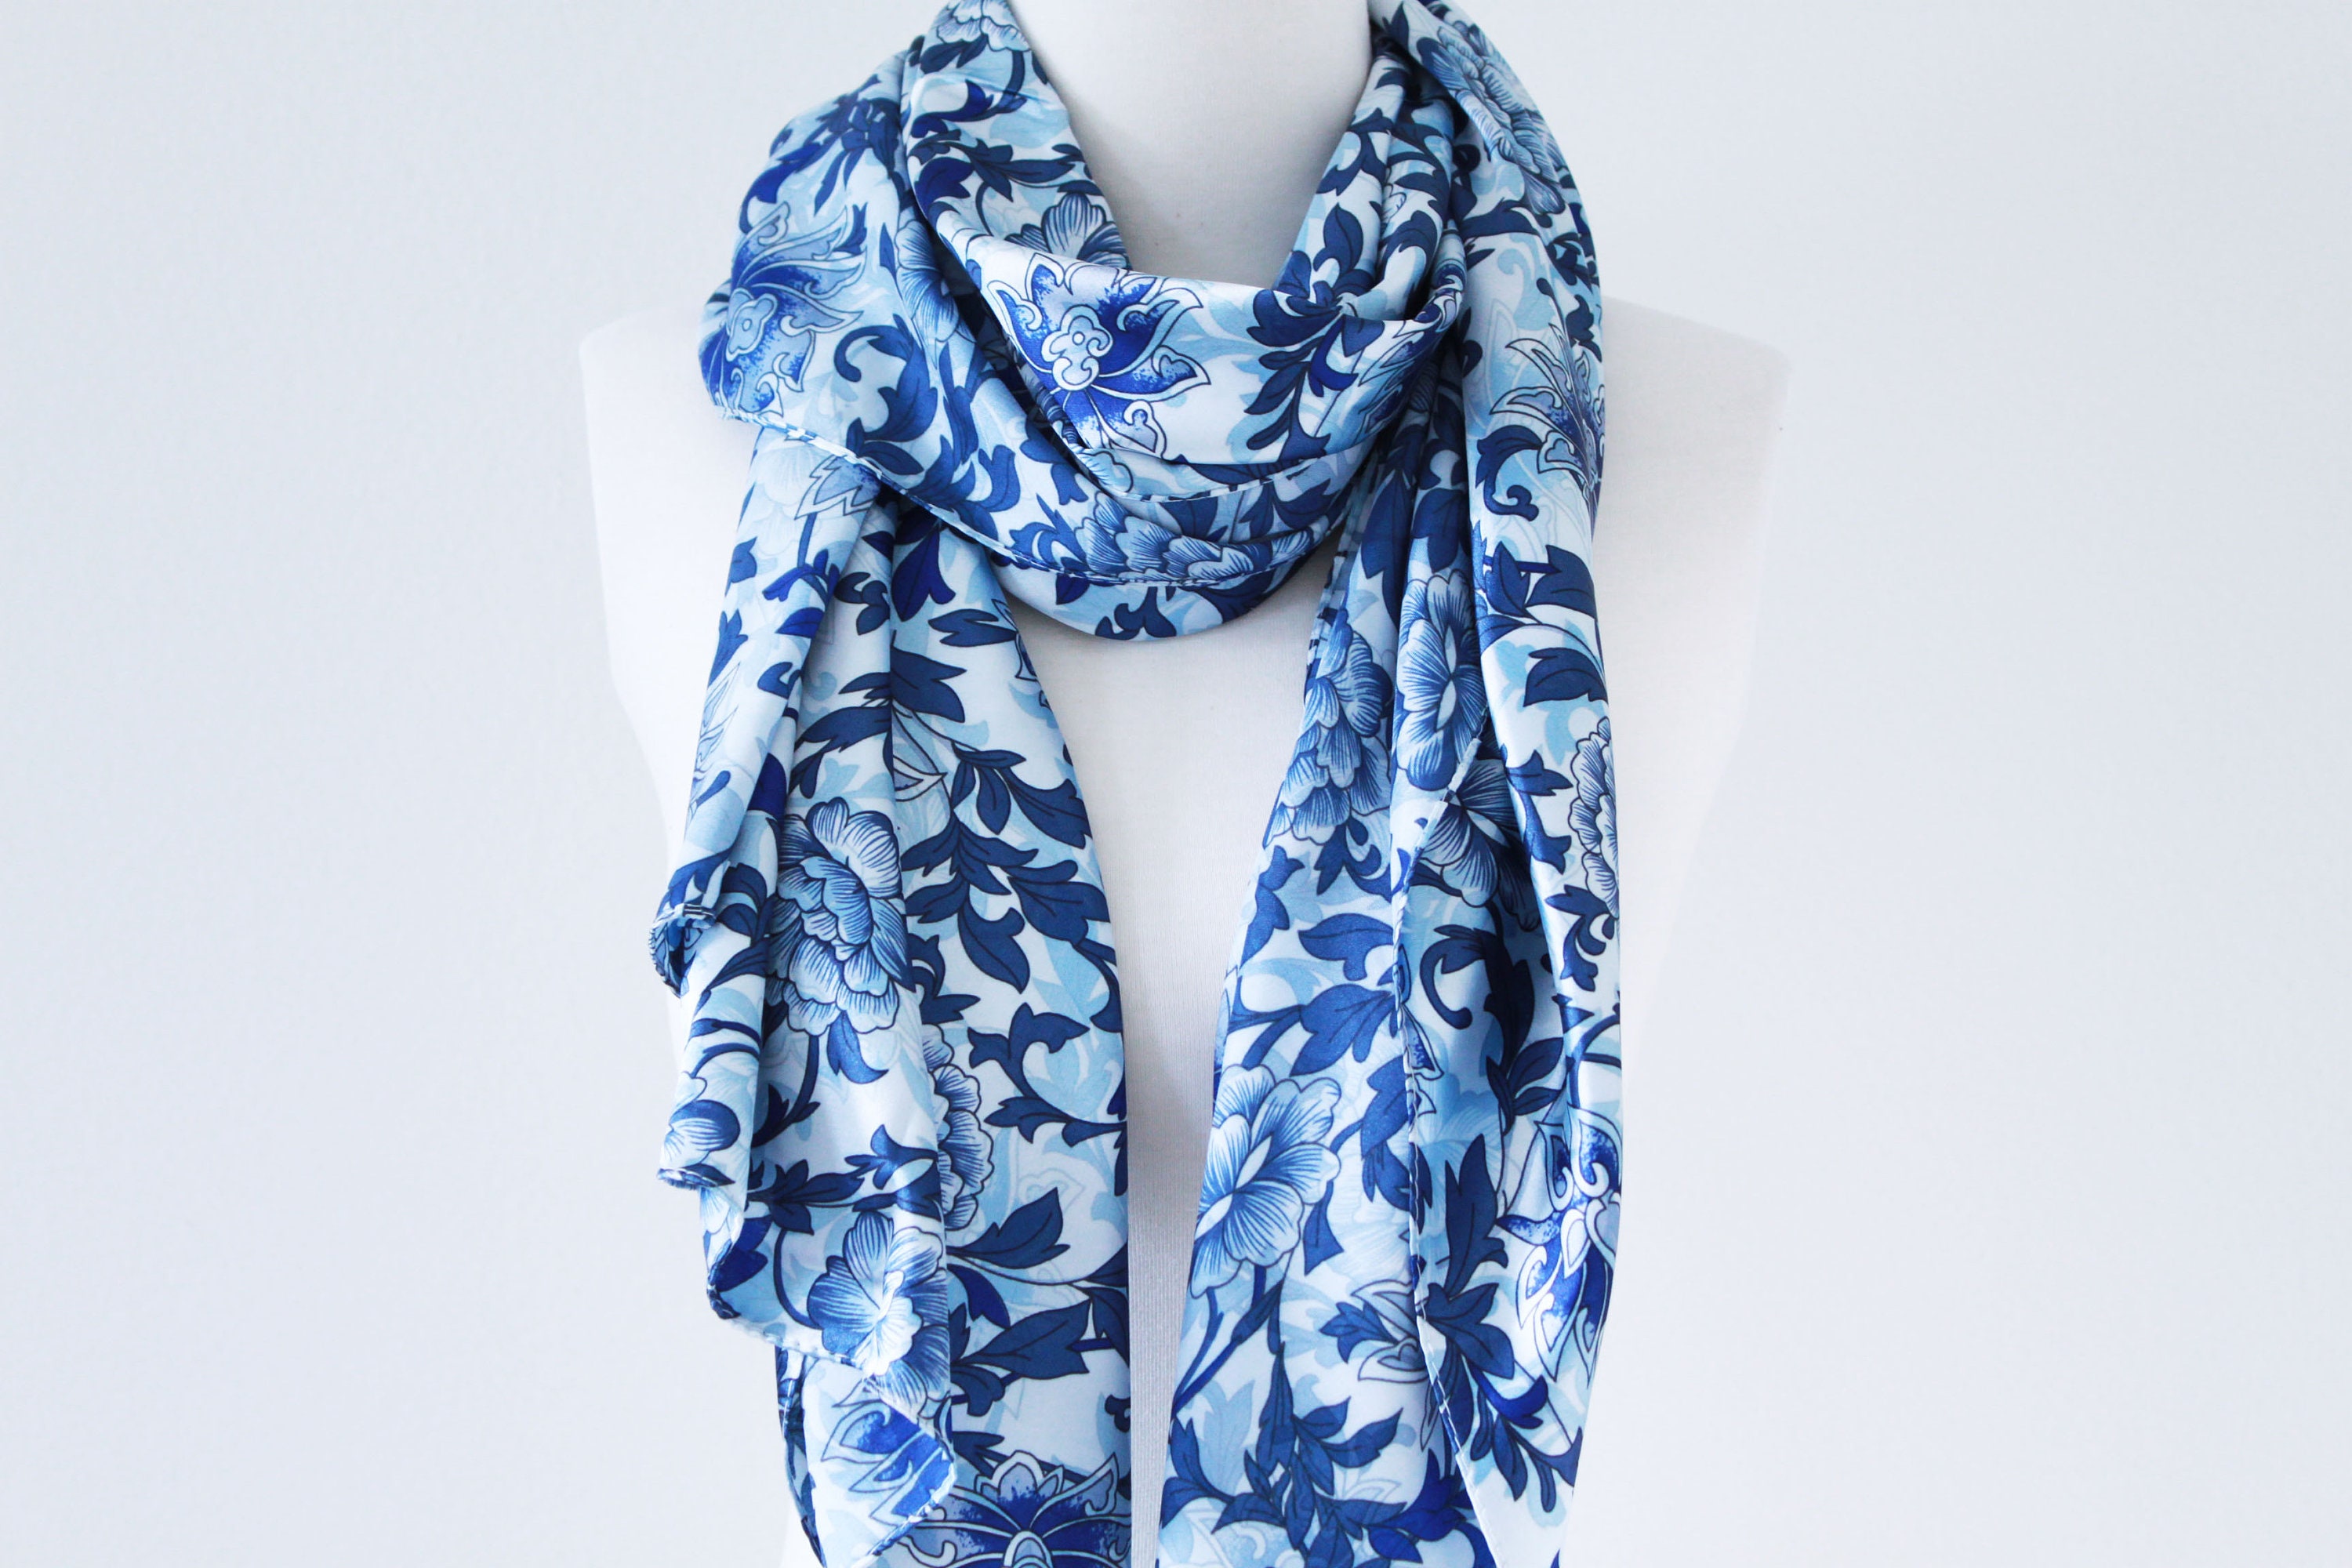 Brown Floral Mens Silk Scarf - Designer neck scarf for winters